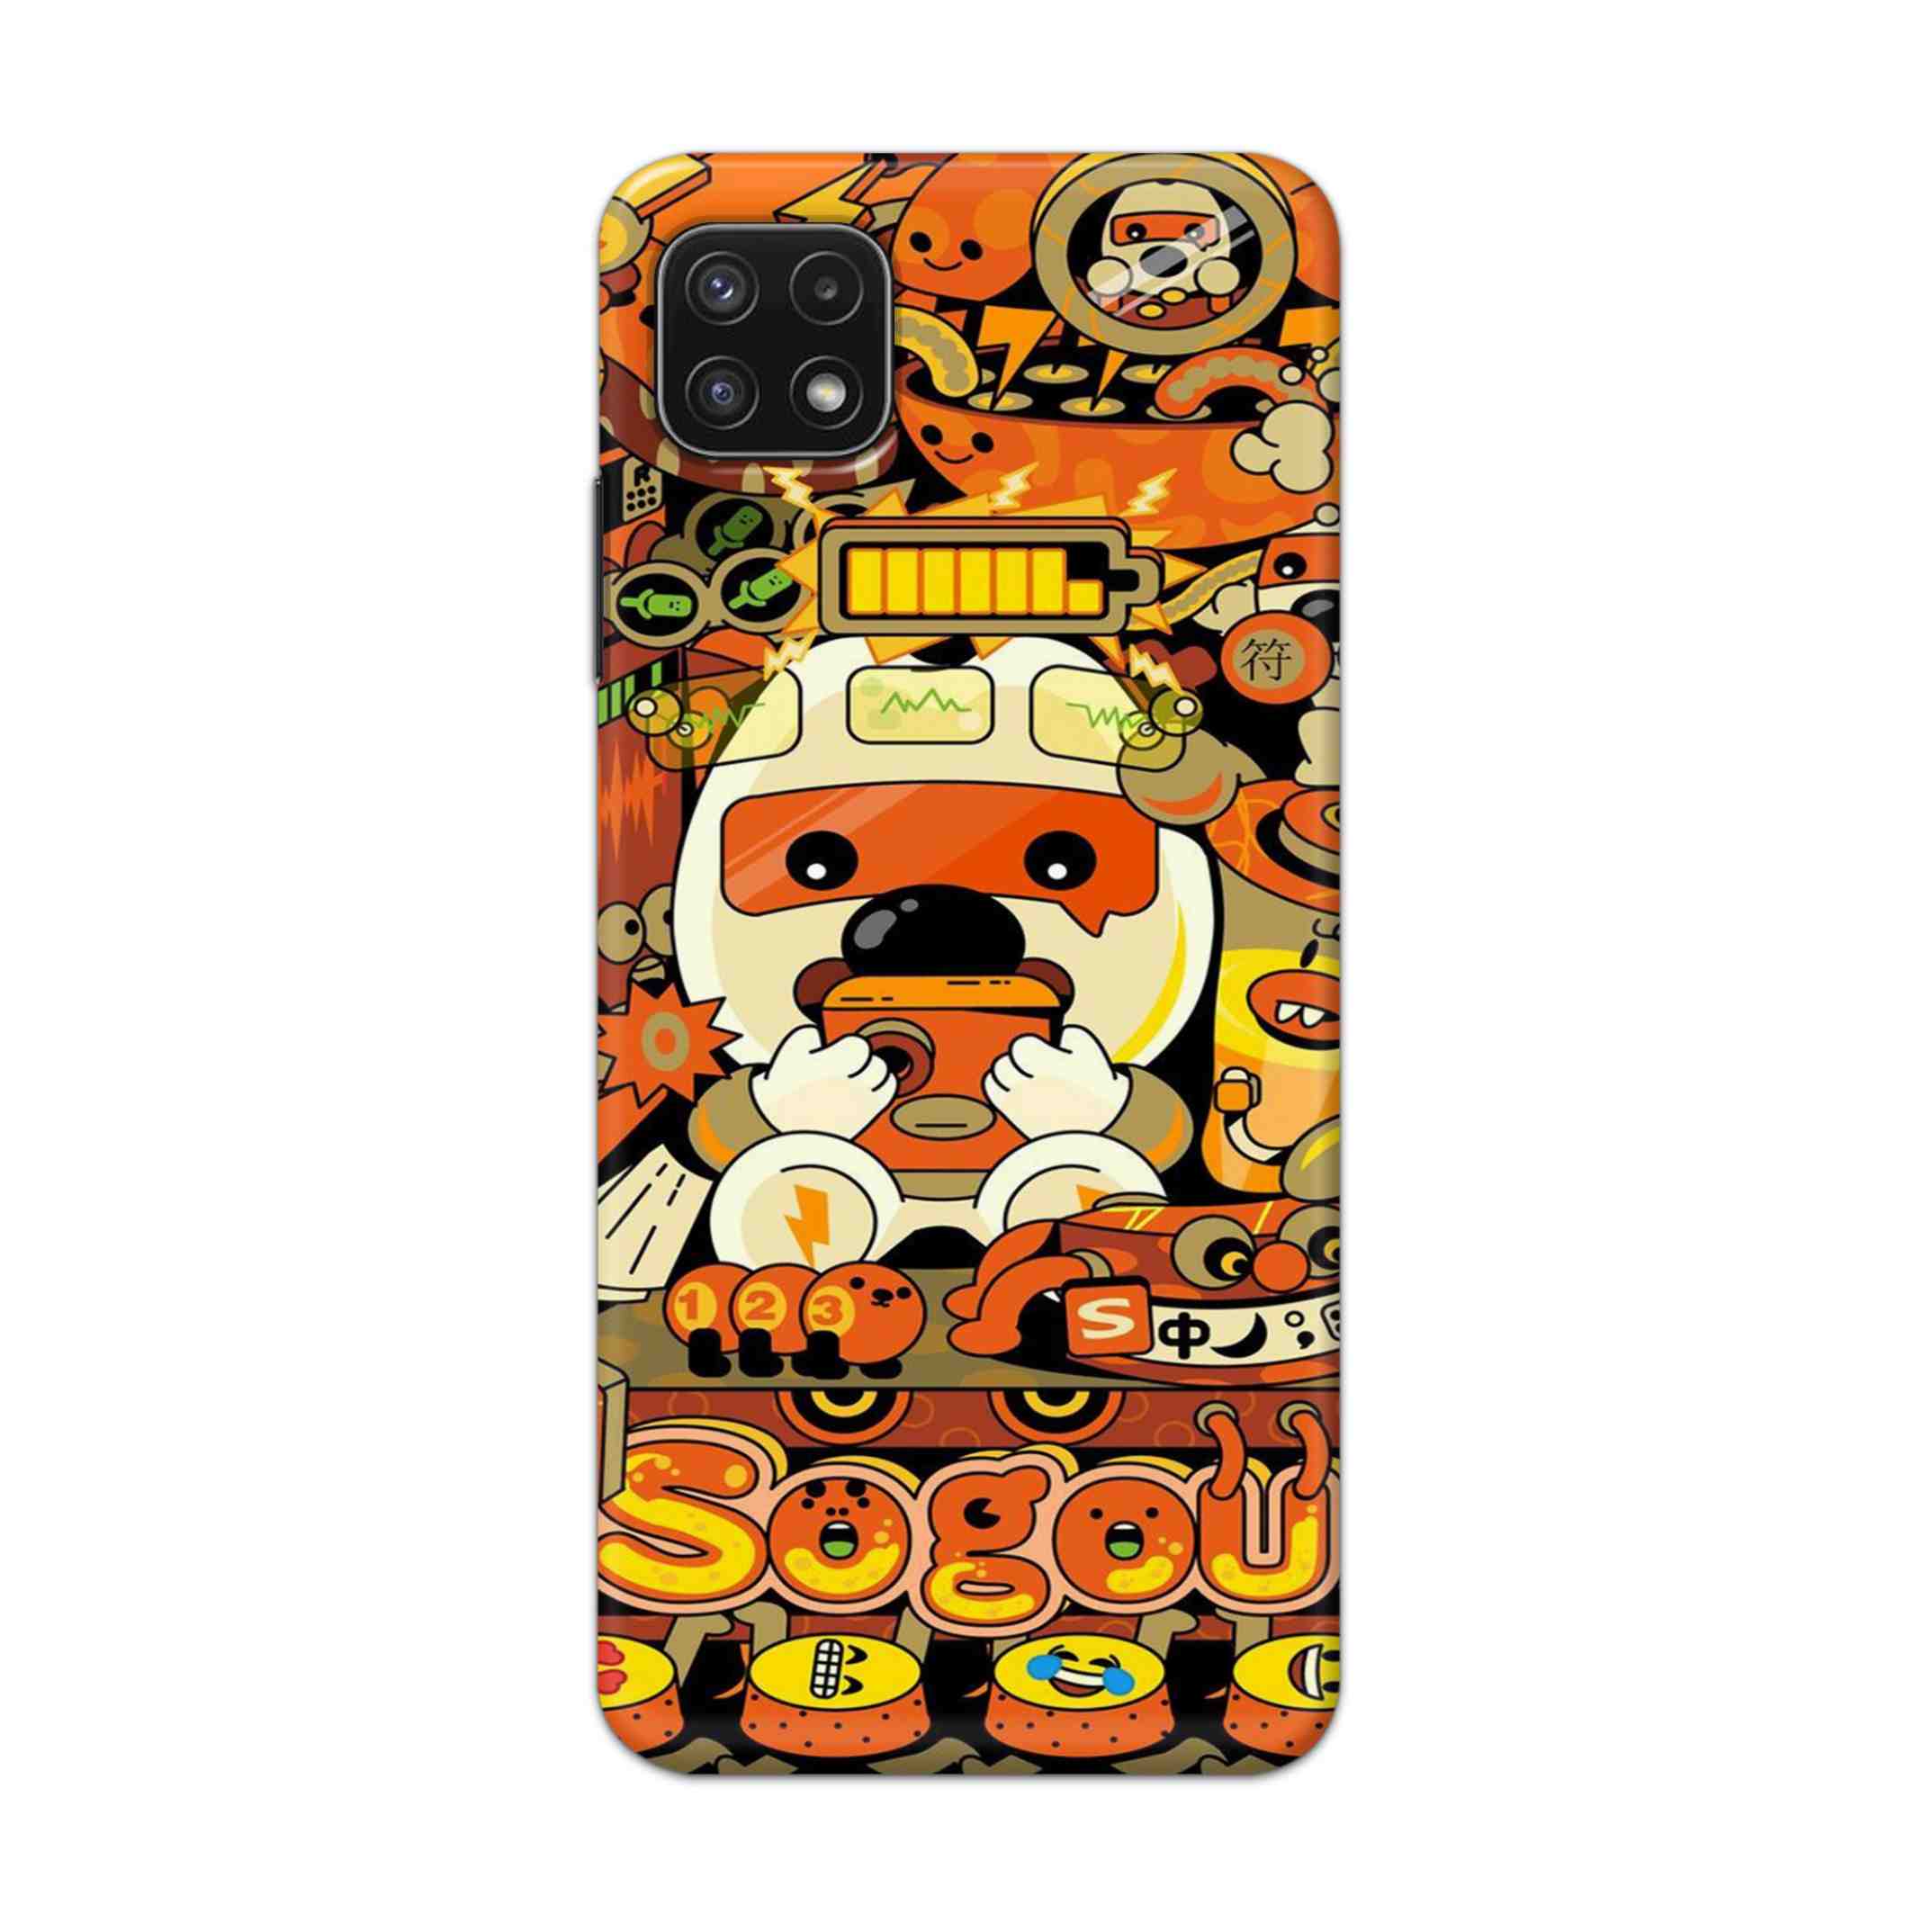 Buy Sogou Hard Back Mobile Phone Case Cover For Samsung A22 5G Online